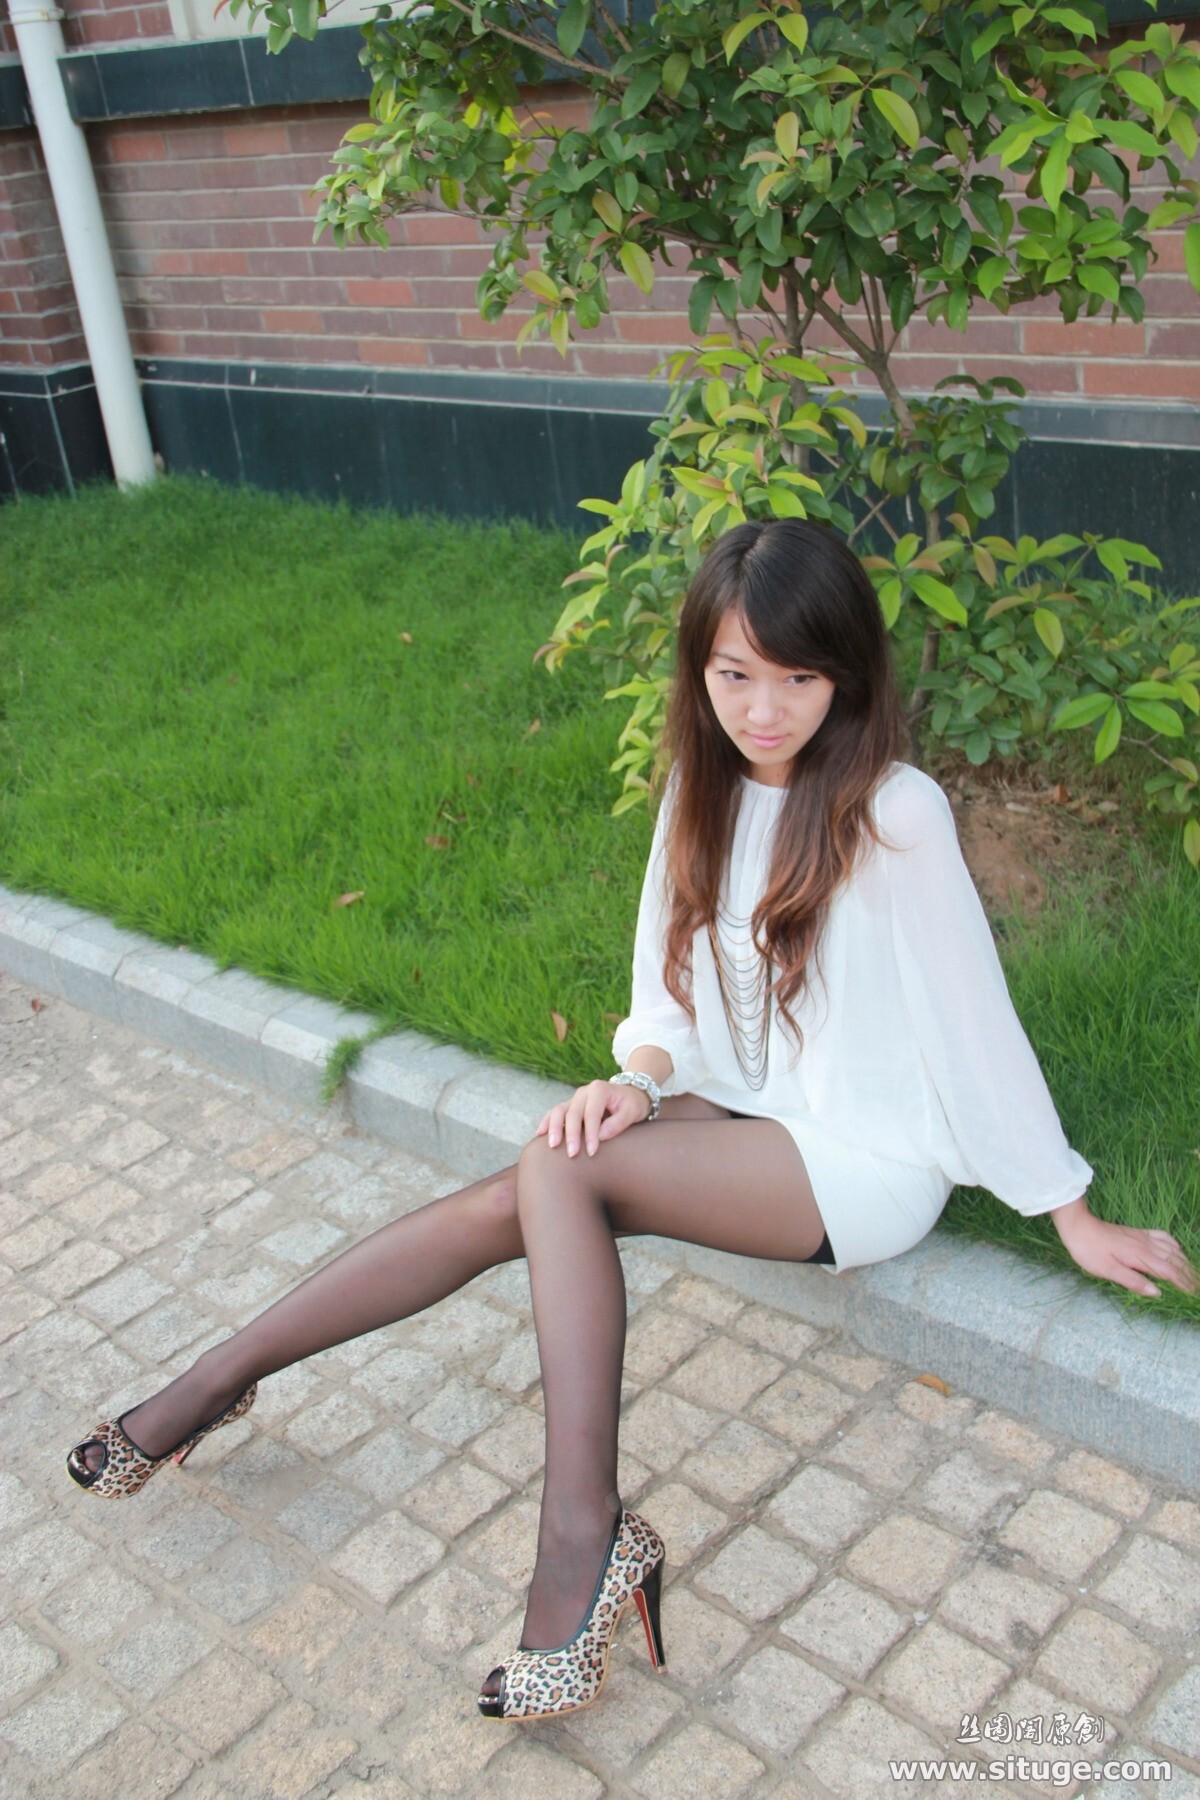 Situge STG no.029 Wenzhen full set of leg silk stockings